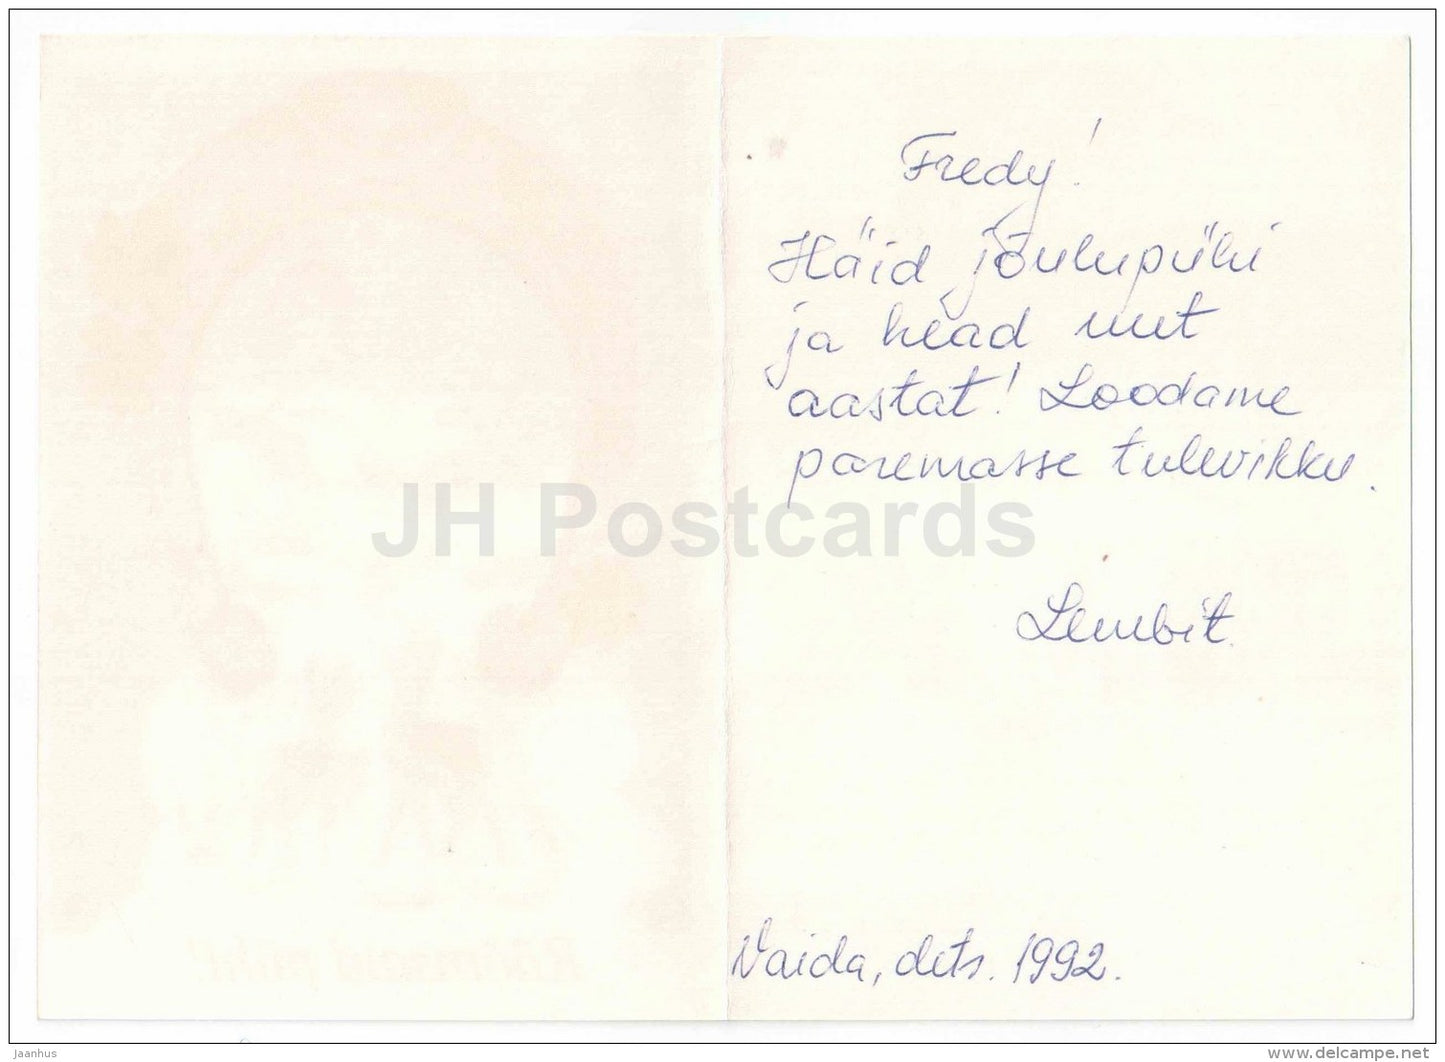 New Year greeting card - deer - horseshoe - winter house - 1970 - Estonia - used in 1992 - JH Postcards